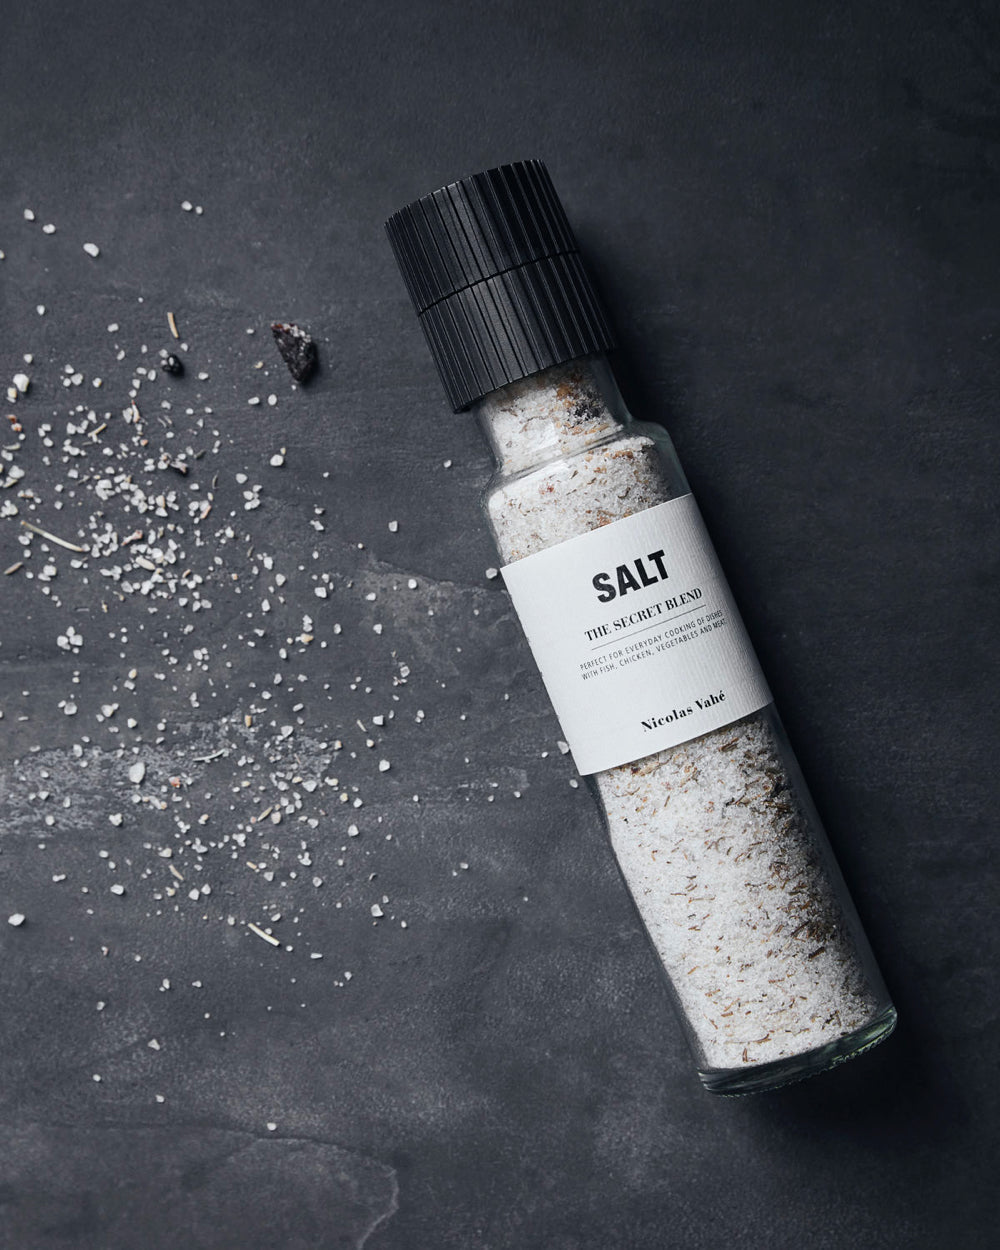 Salt, the secret blend